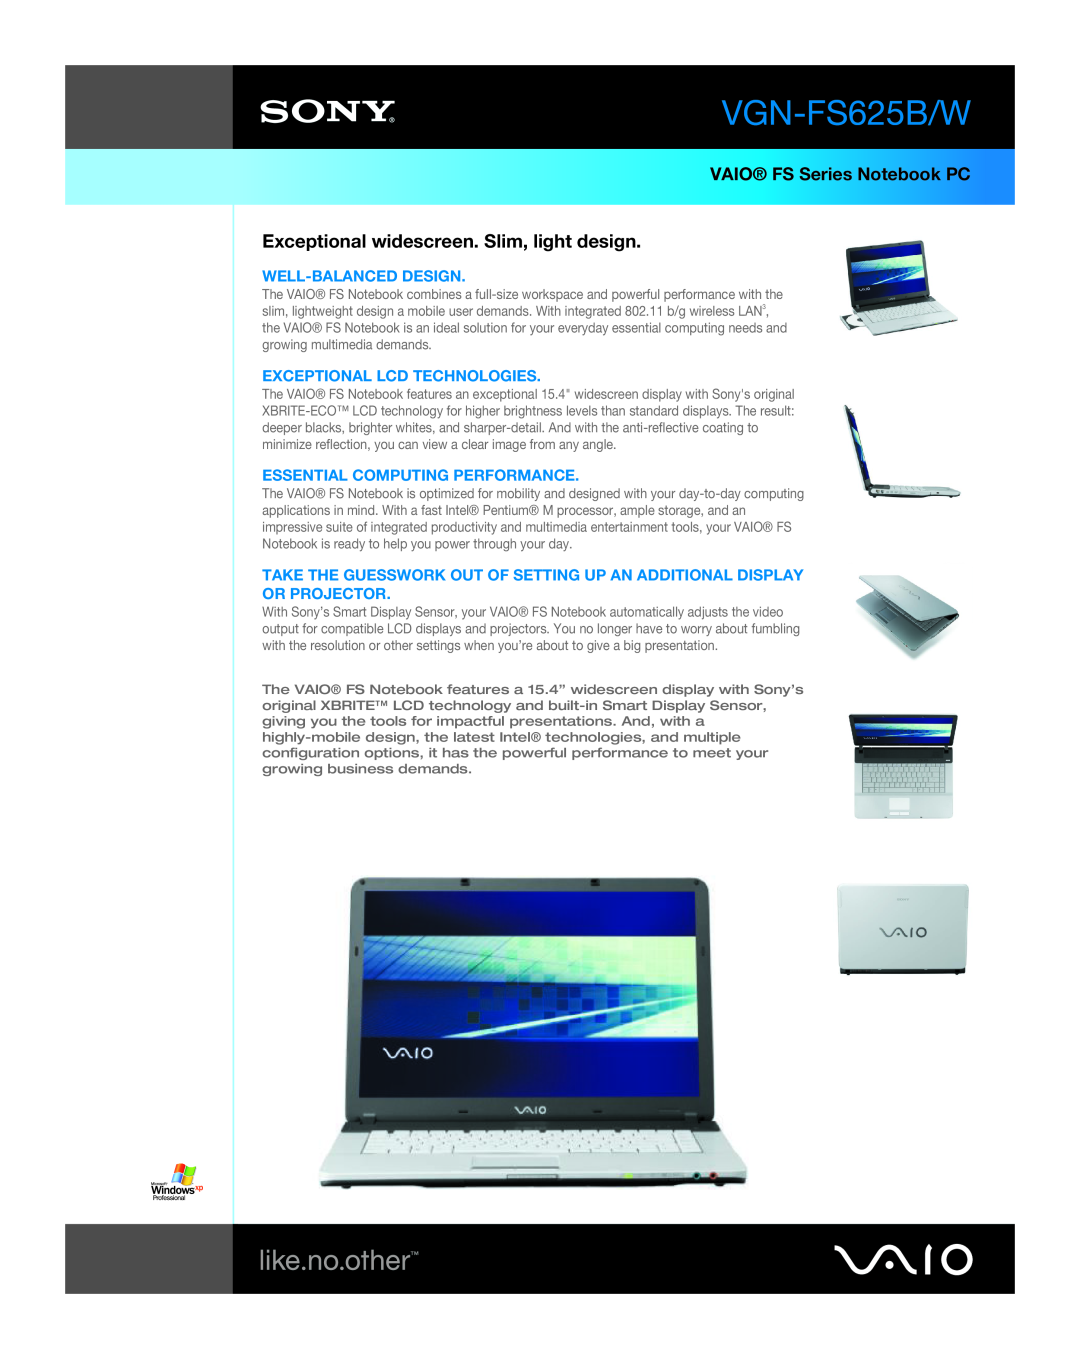 Sony VGN-FS625B/W manual VAIO FS Series Notebook PC, Exceptional widescreen. Slim, light design, Well-Balanced Design 